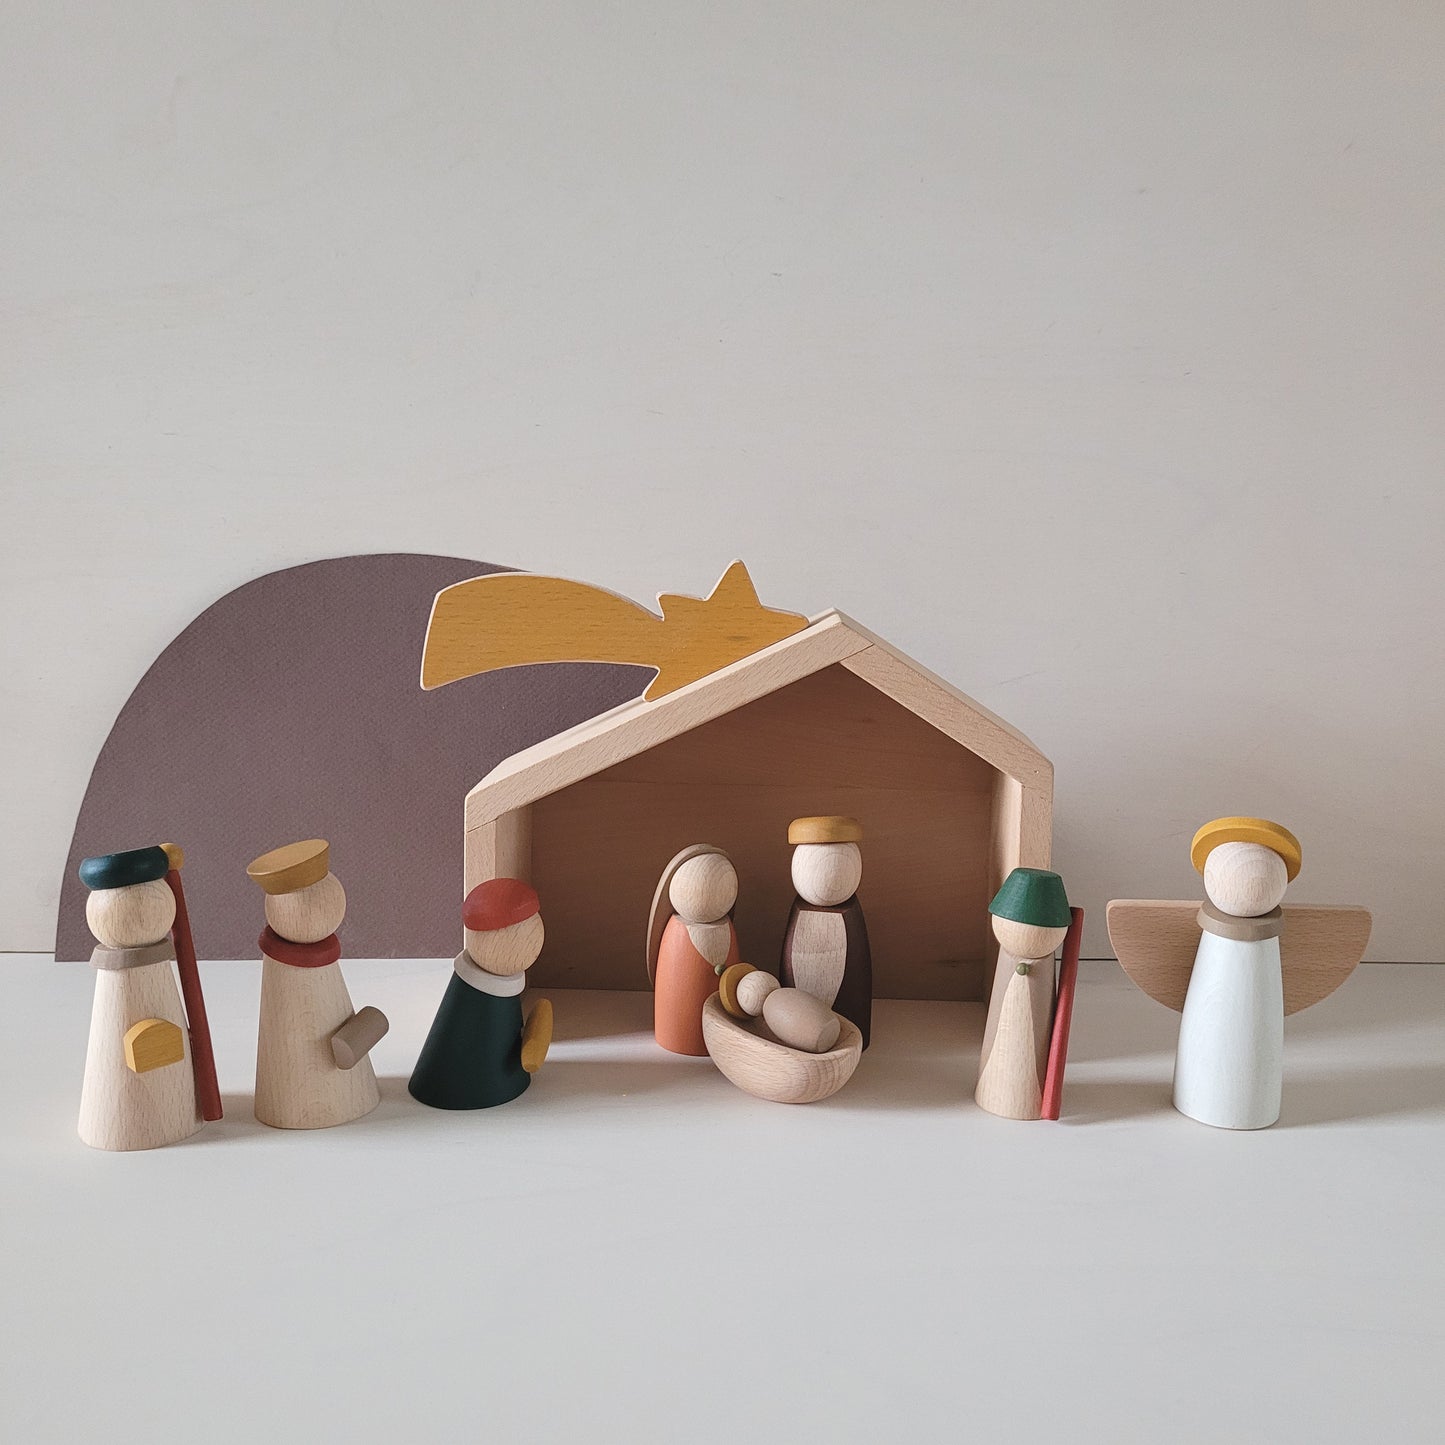 Wooden Nativity Set